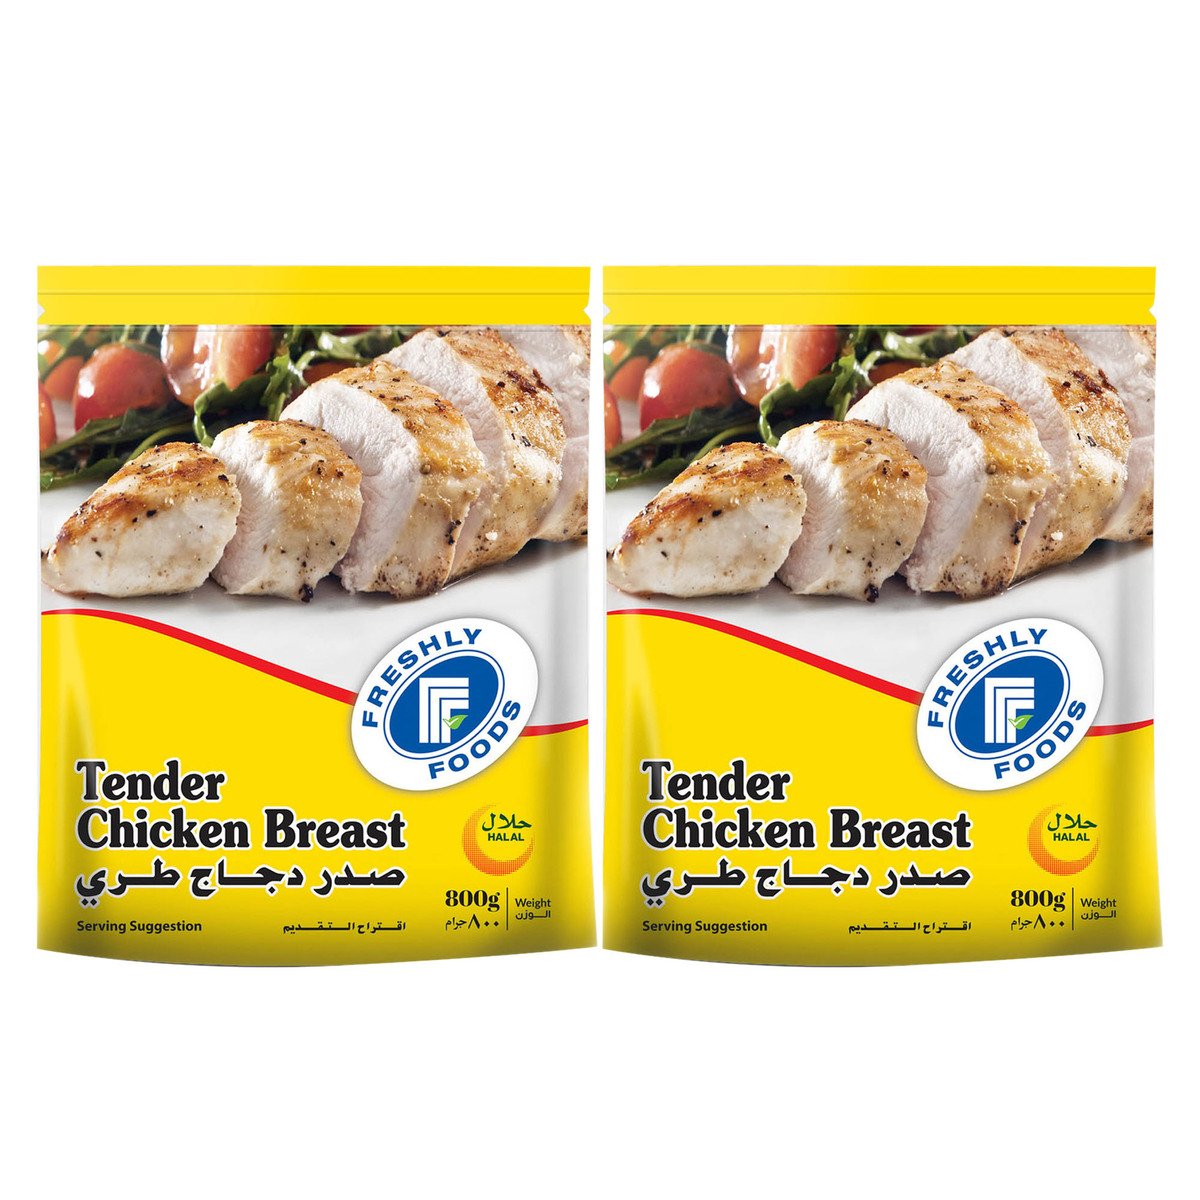 Freshly Frozen Tender Chicken Breast Value Pack 2 x 800 g